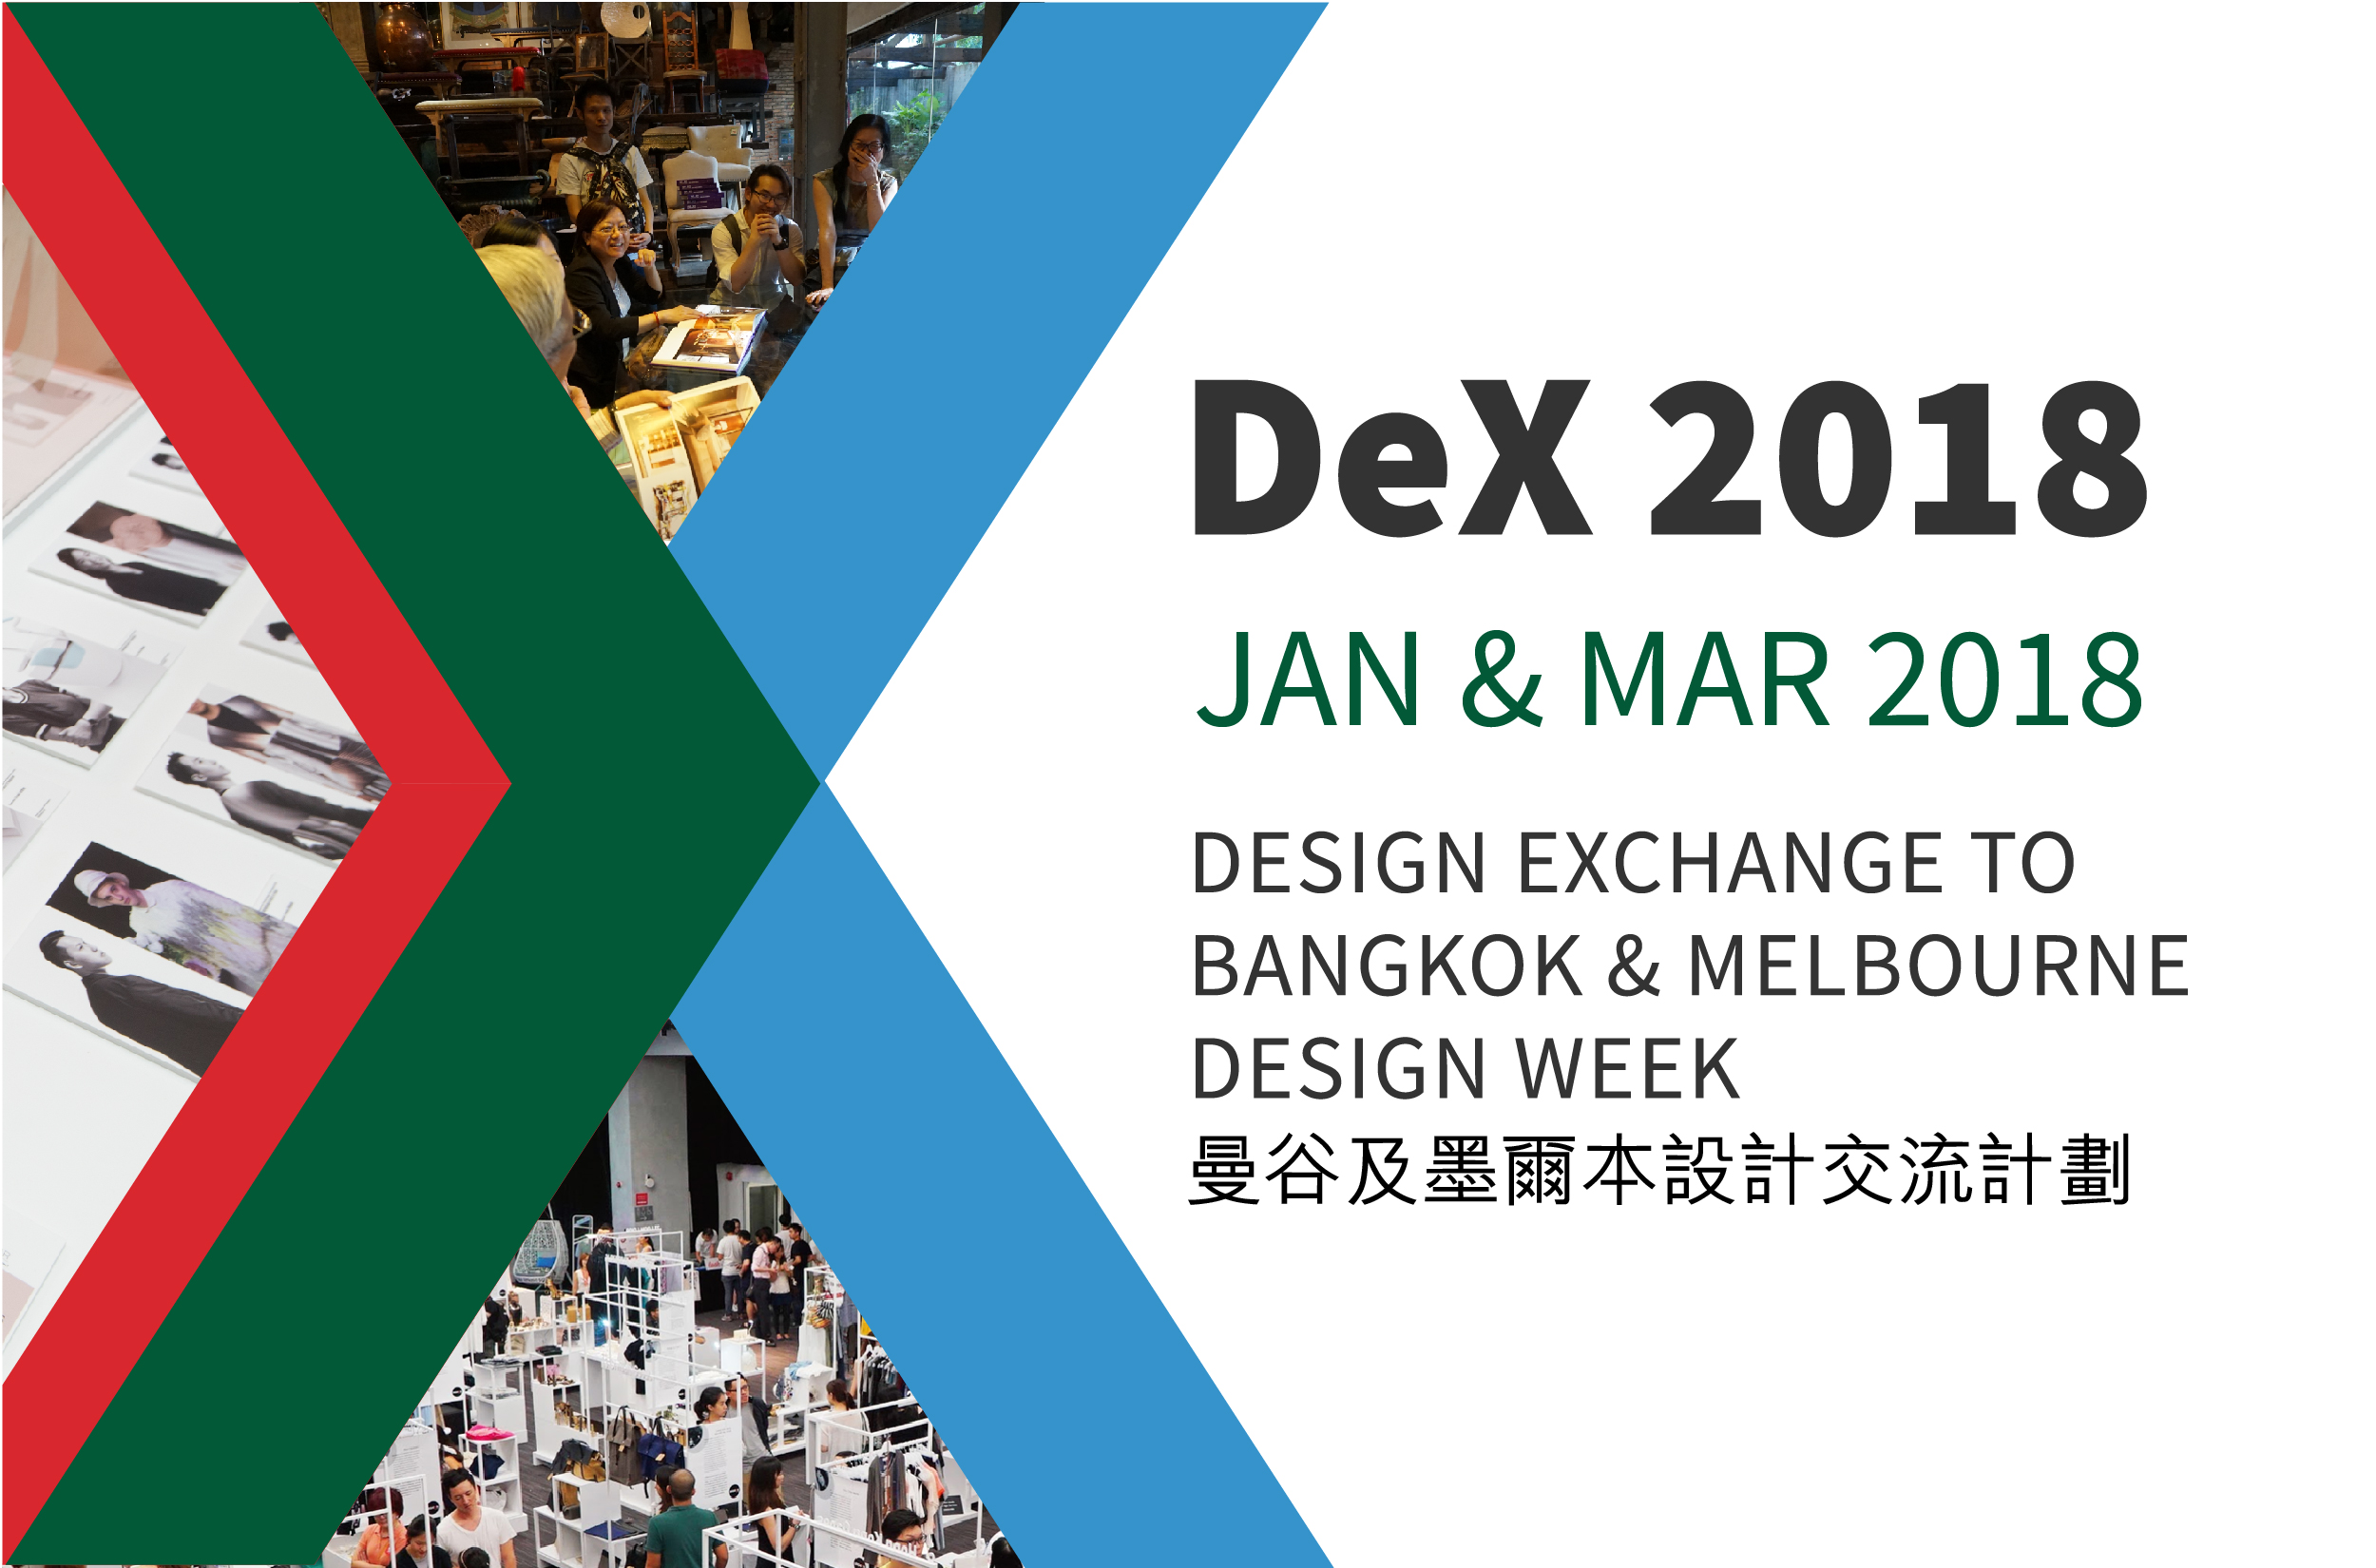 "DeX 2018" 曼谷及墨爾本設計周 - 設計交流計劃